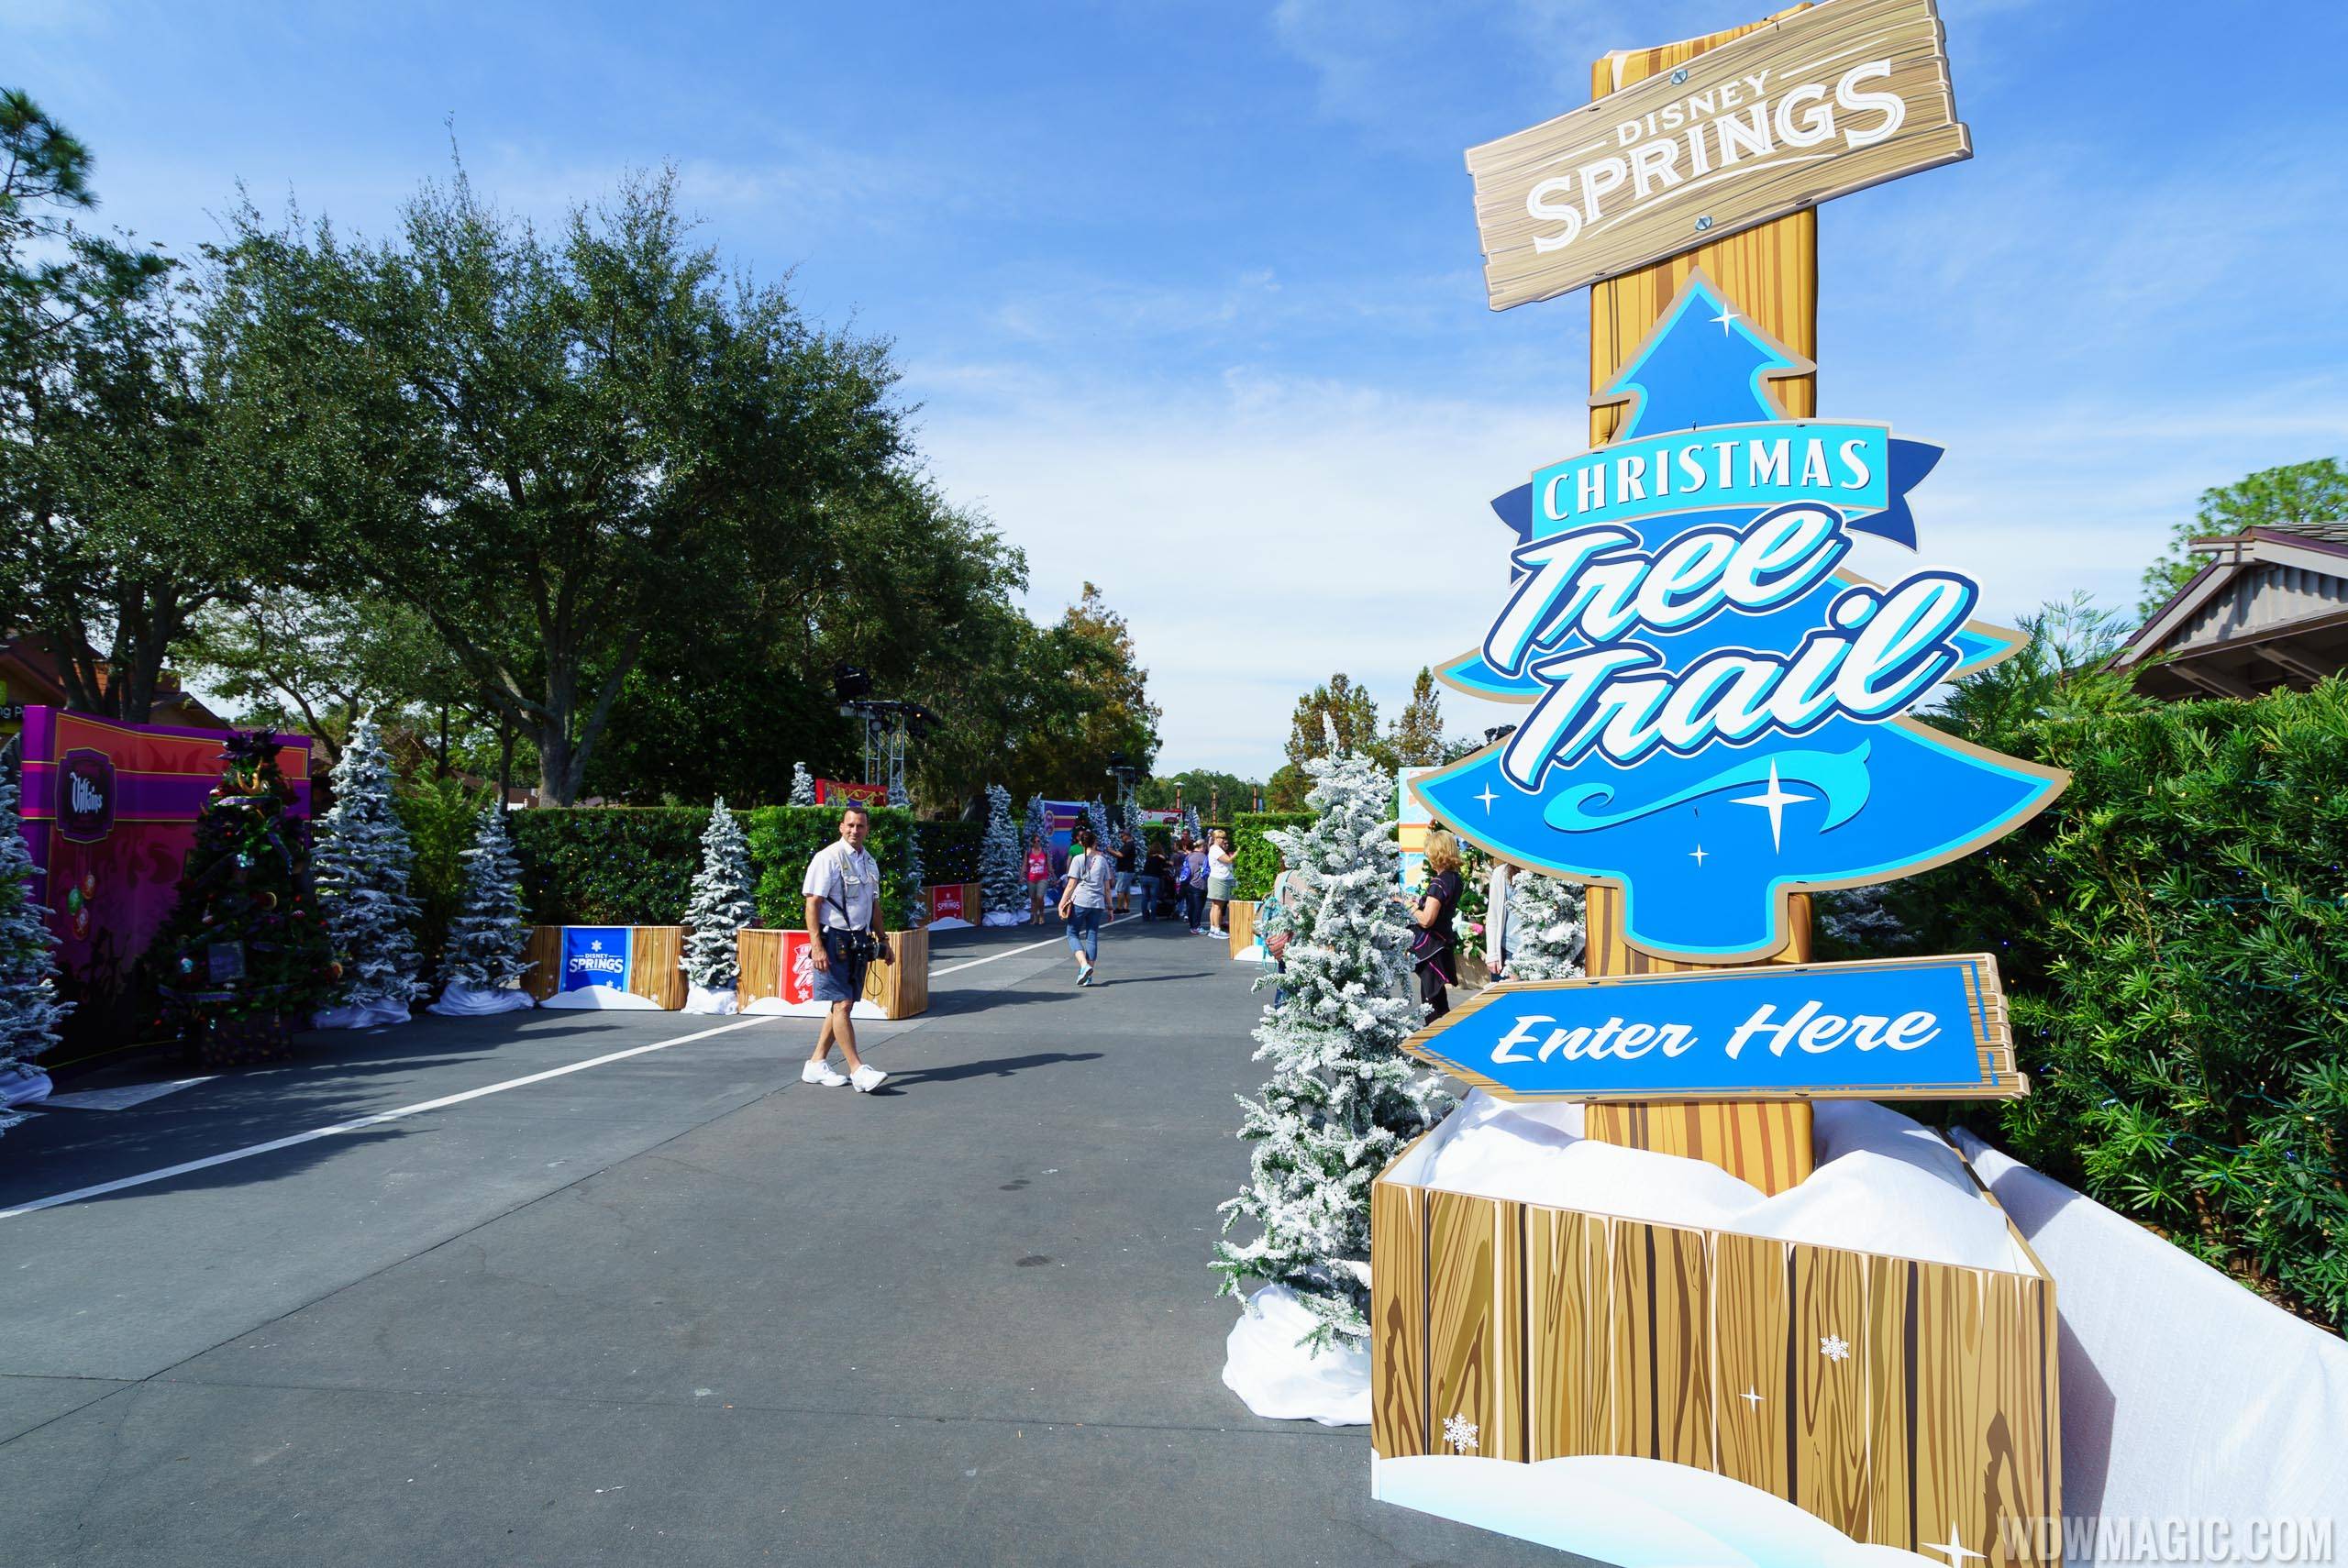 PHOTOS - Disney Springs Christmas Tree Trail now open